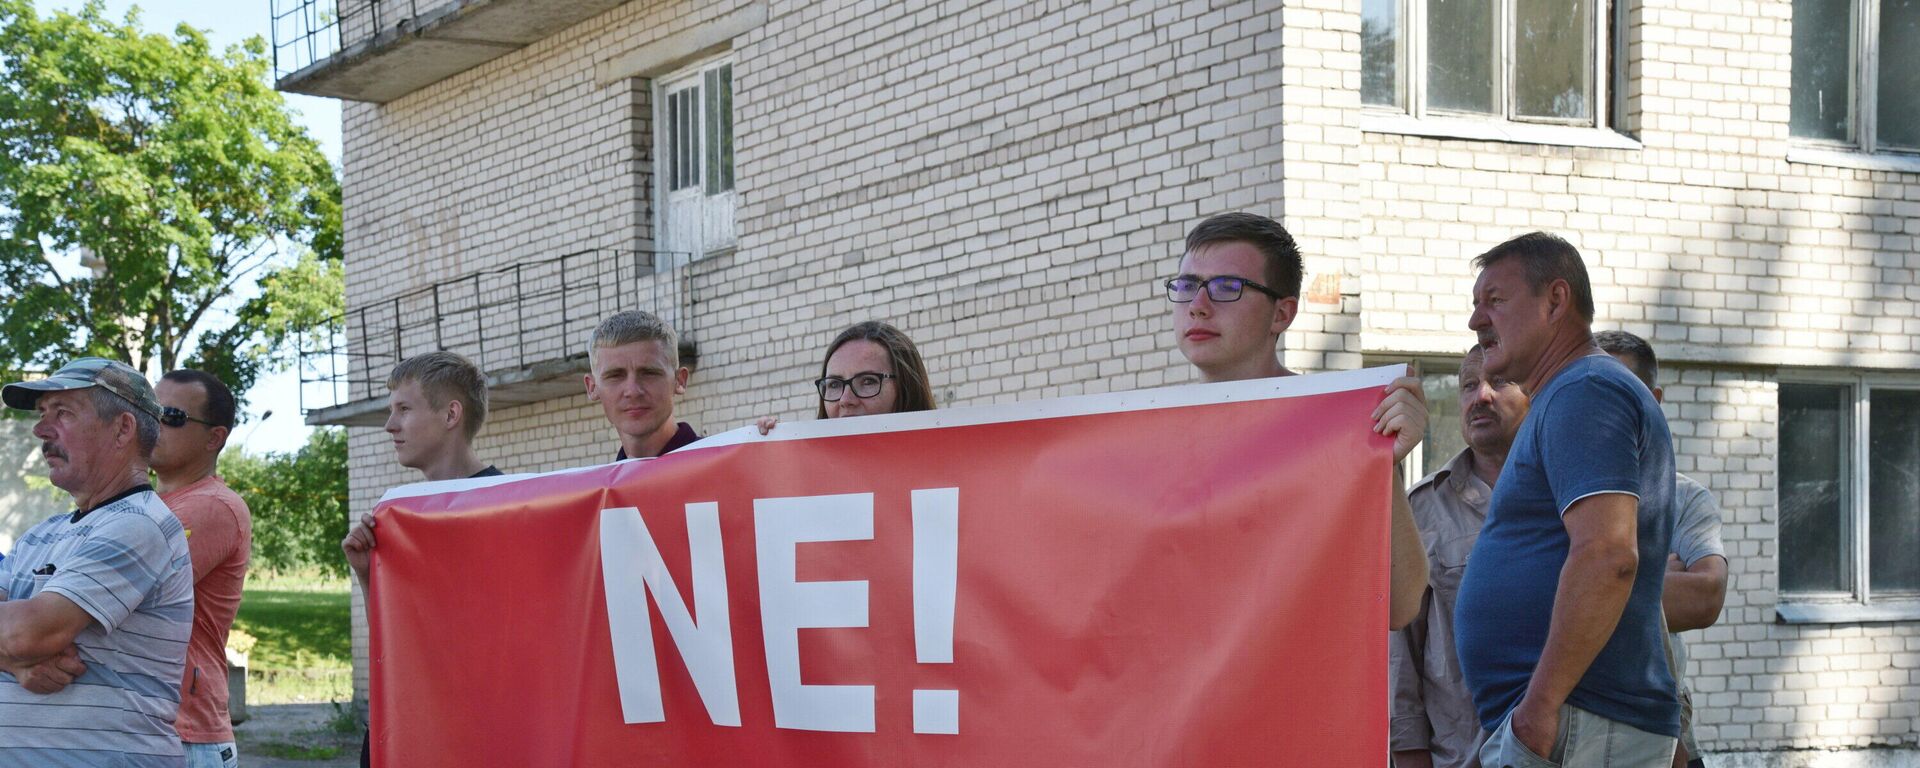 Акция протеста в Девенишкесе против строительства центра для мигрантов - Sputnik Литва, 1920, 26.07.2021